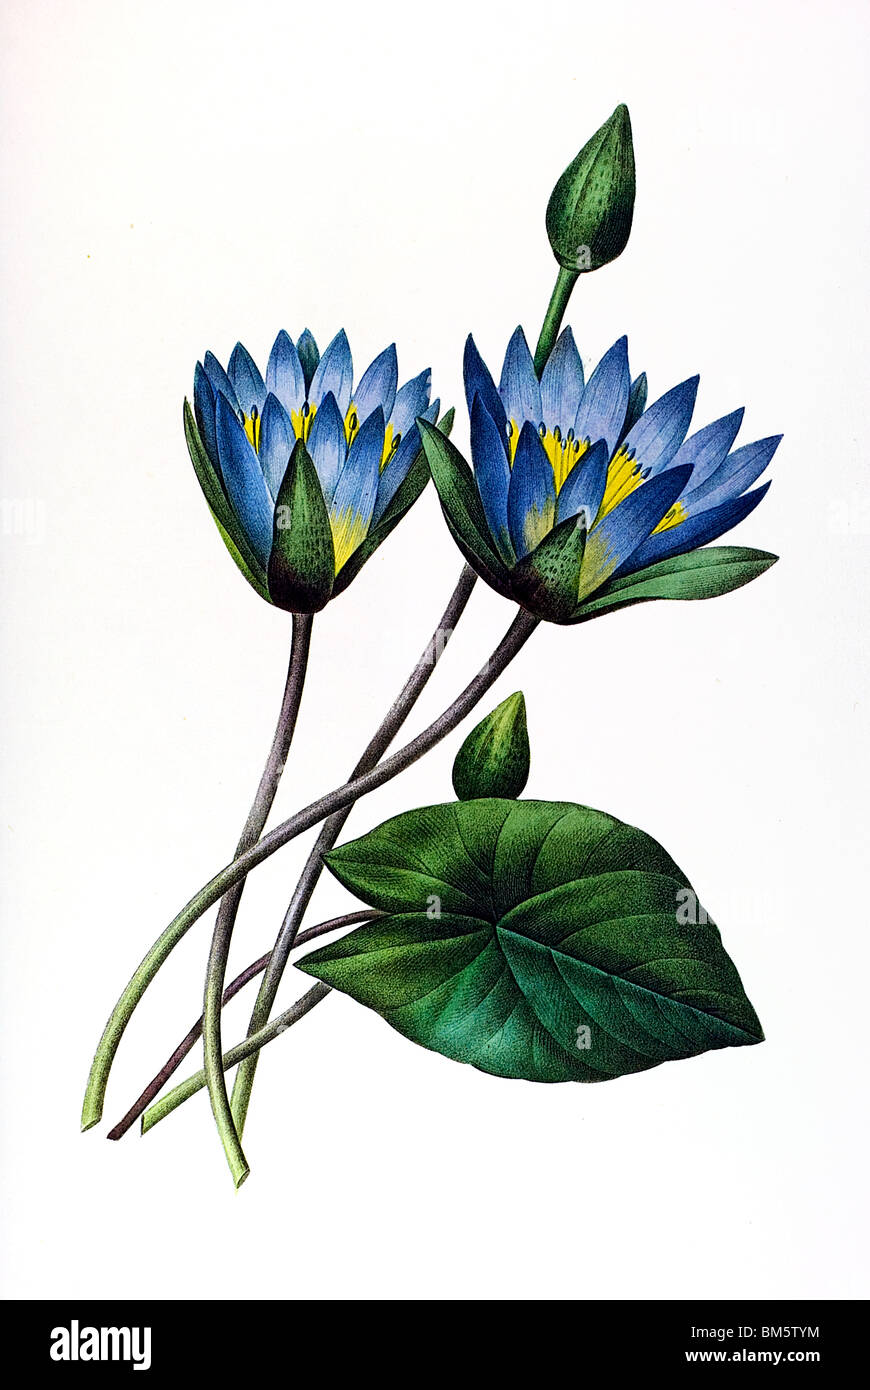 Blauer Lotus Photos, Download The BEST Free Blauer Lotus Stock Photos & HD  Images